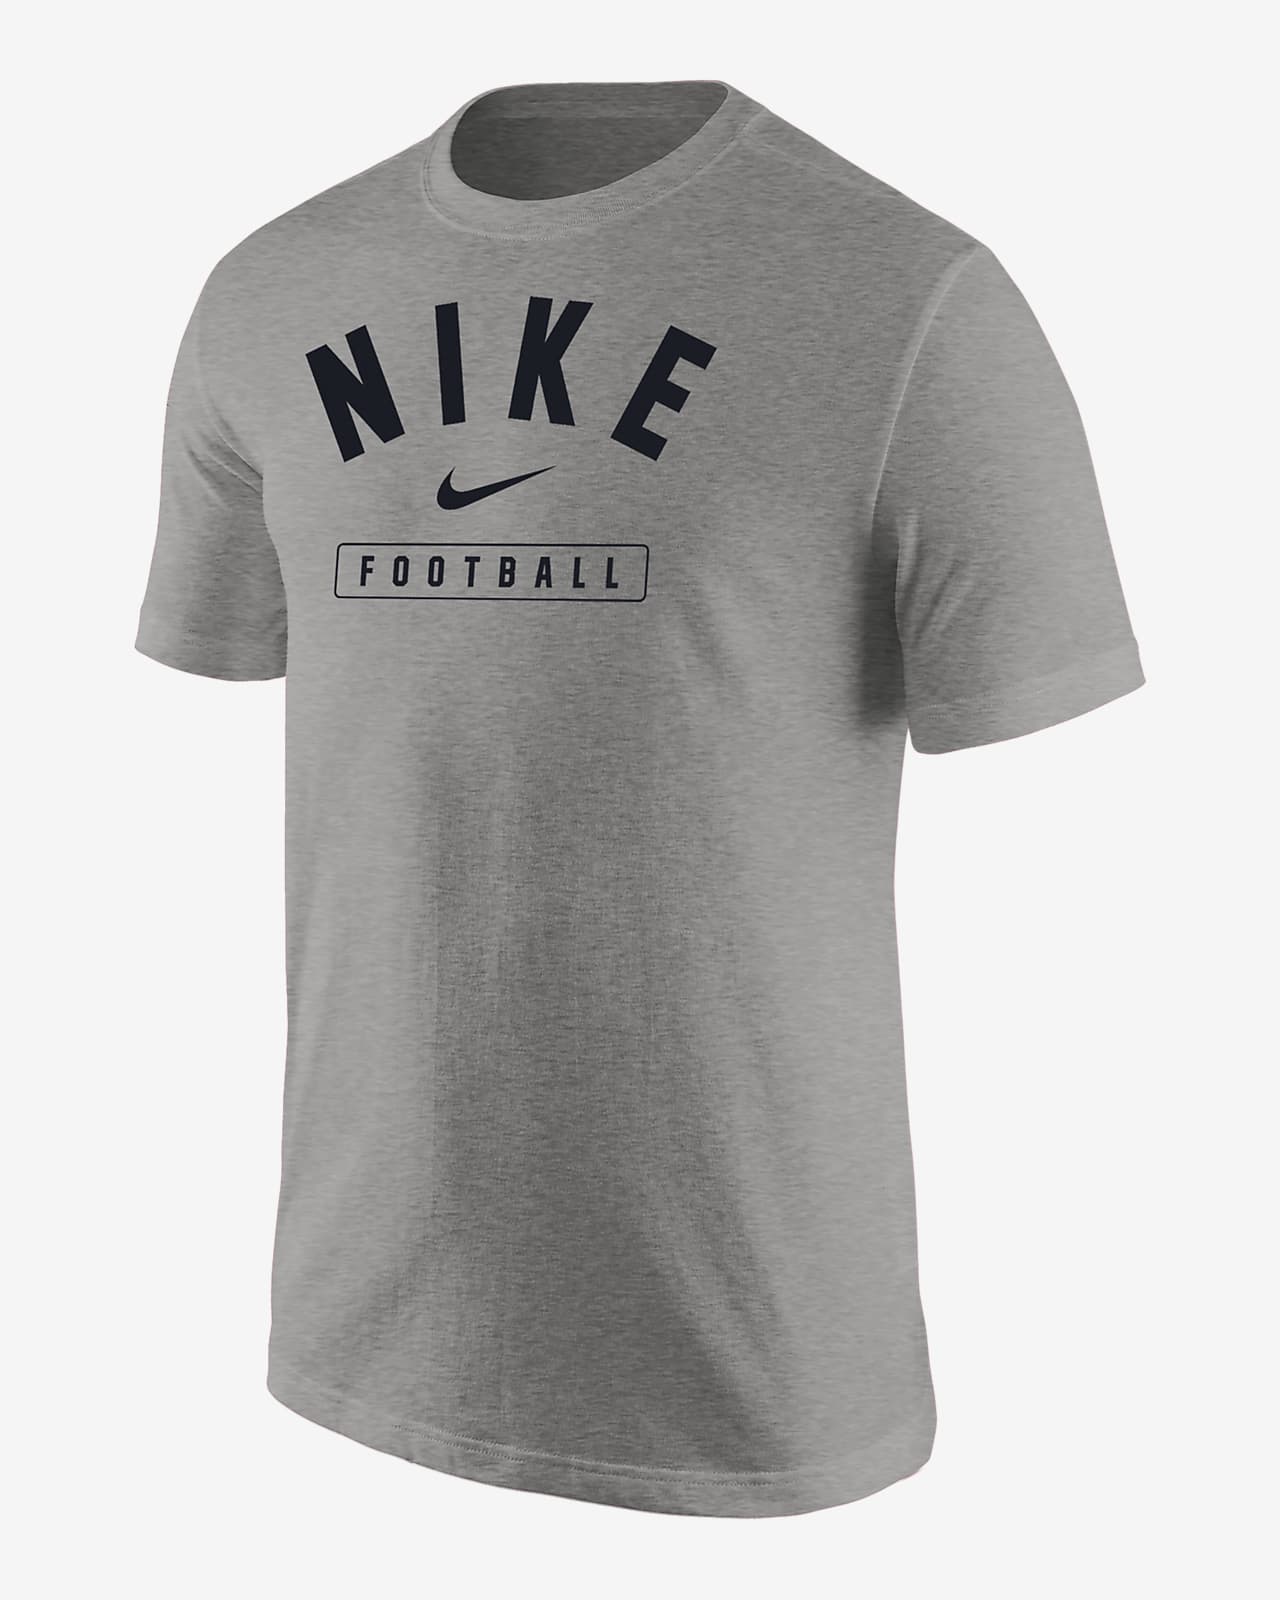 Nike Football Men's T-Shirt